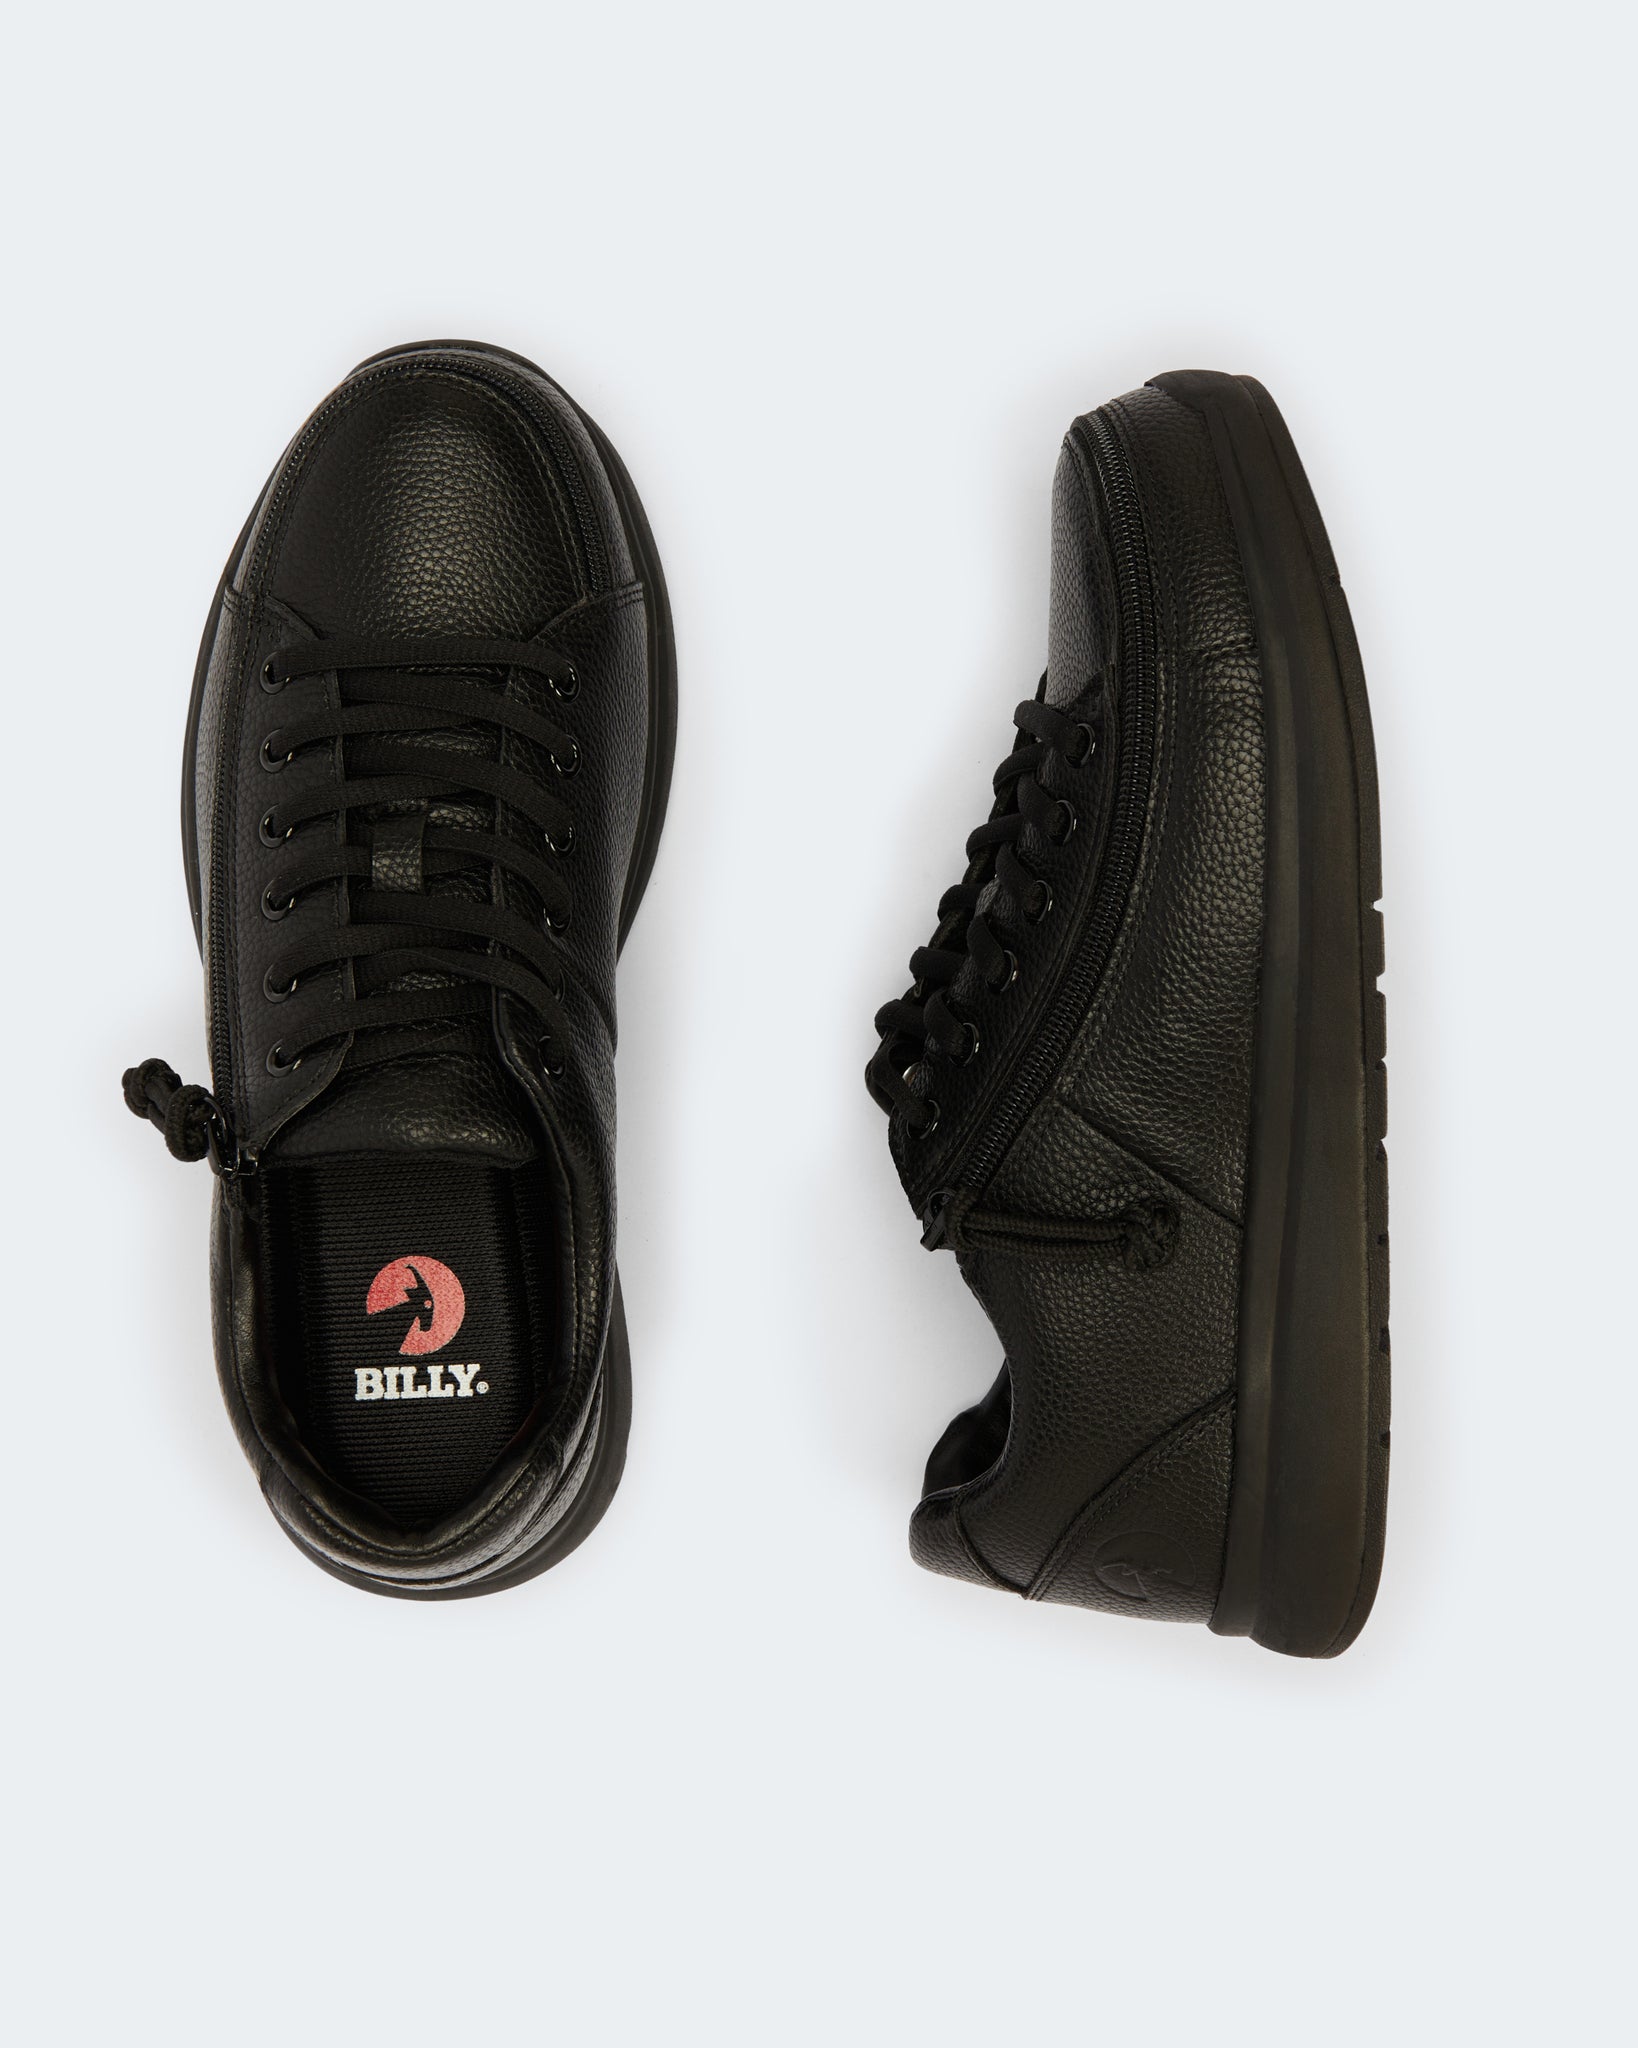 Comfort Sneaker (Women) - Black to the Floor Faux Leather